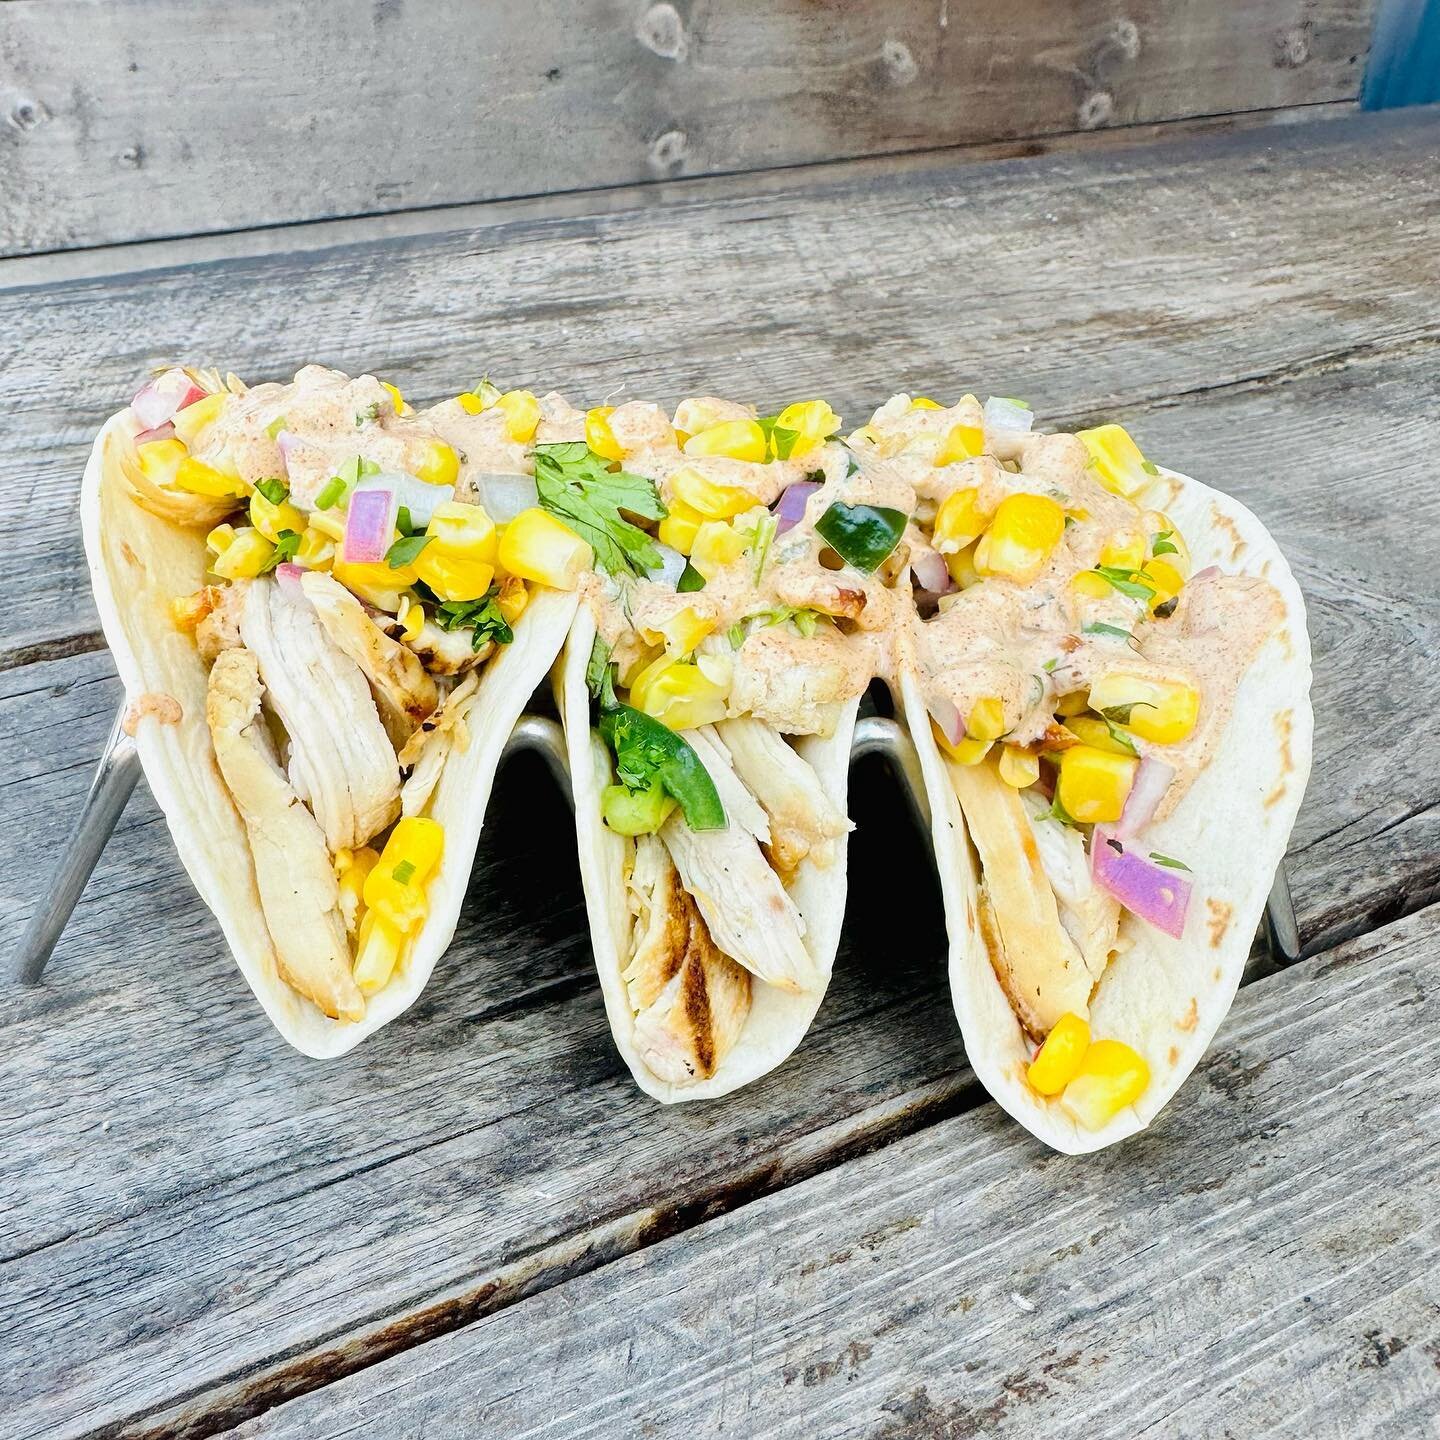 Taco 🌮 Taco 🌮 Taco Tuesday 

Pulled Chicken | Corn Salsa | Chili Ranch 

#lpsf #funnotfancy #tacotuesday #patioseason